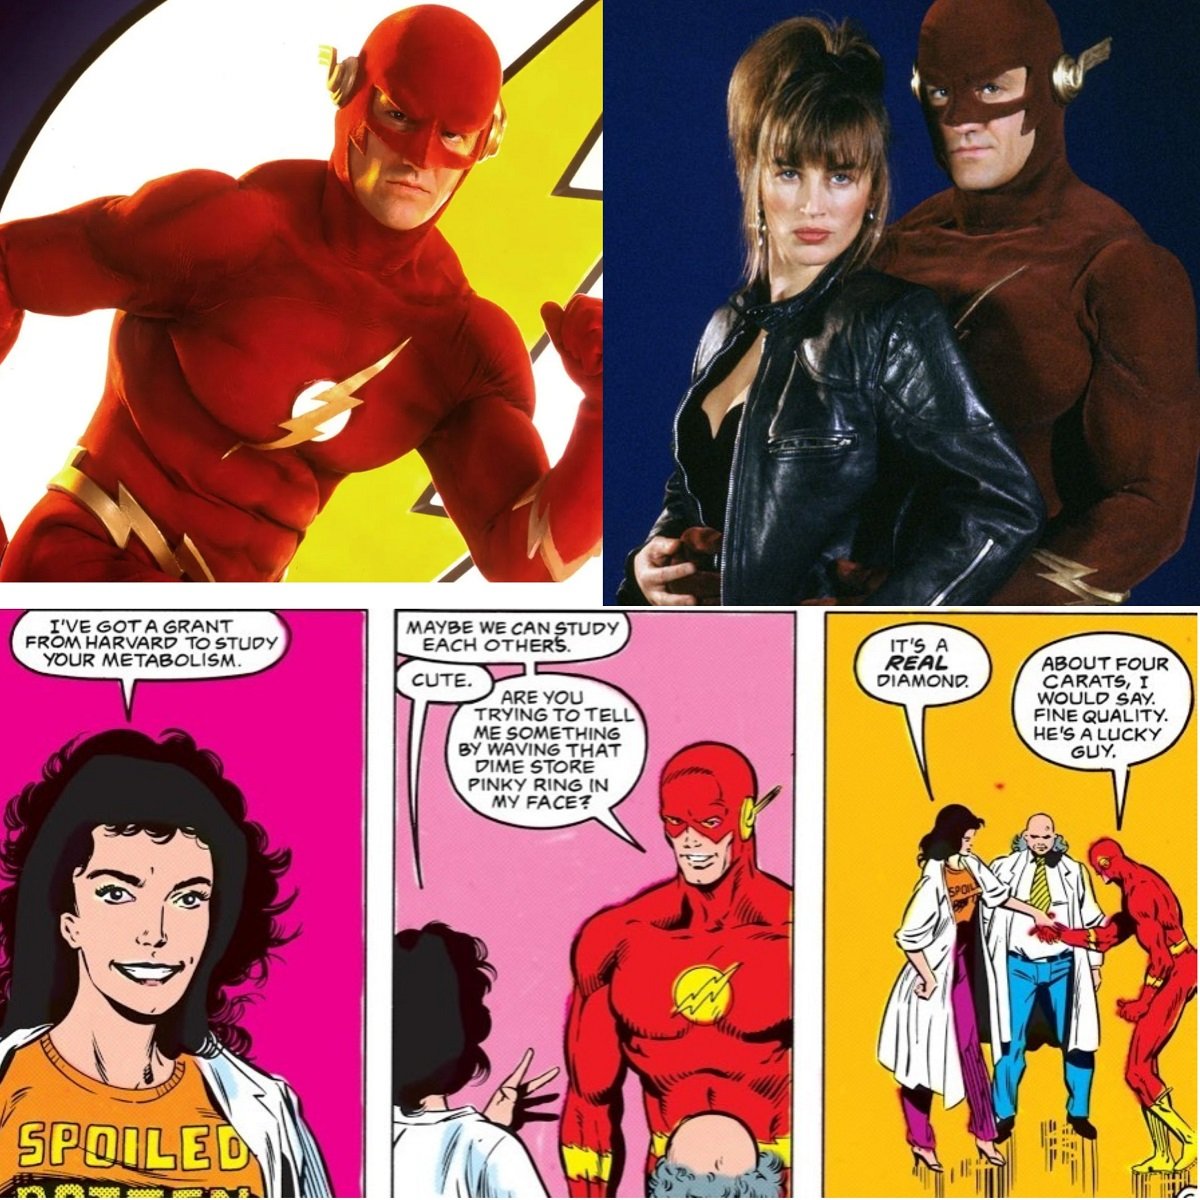 John Wesley Shipp as the 1990 TV Flash, Tina McGee (Amanda Pays) with John Wesley Shipp, and the DC Comics Tina McGee meets Wally West.